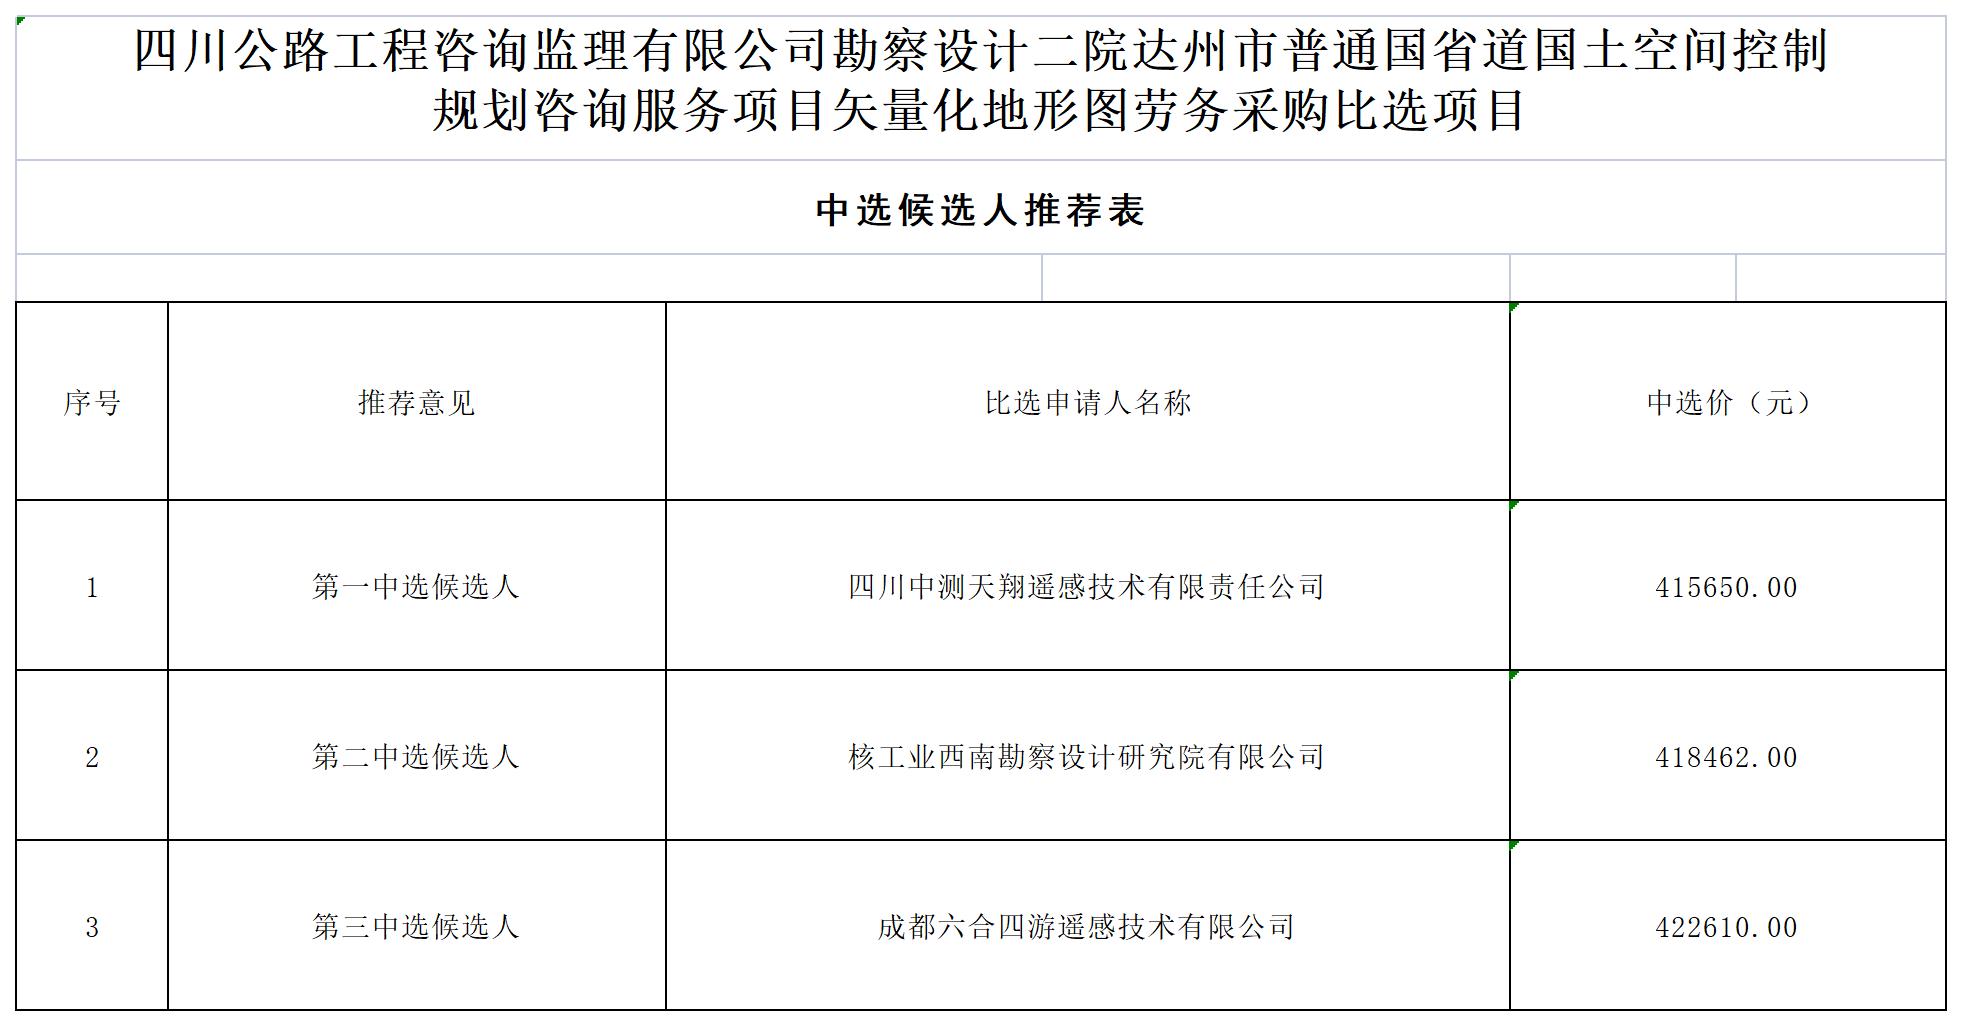 HTH华体会·(中国)官方网站勘察设计二院达州市普通国省道国土空间控制_A1F7.jpg